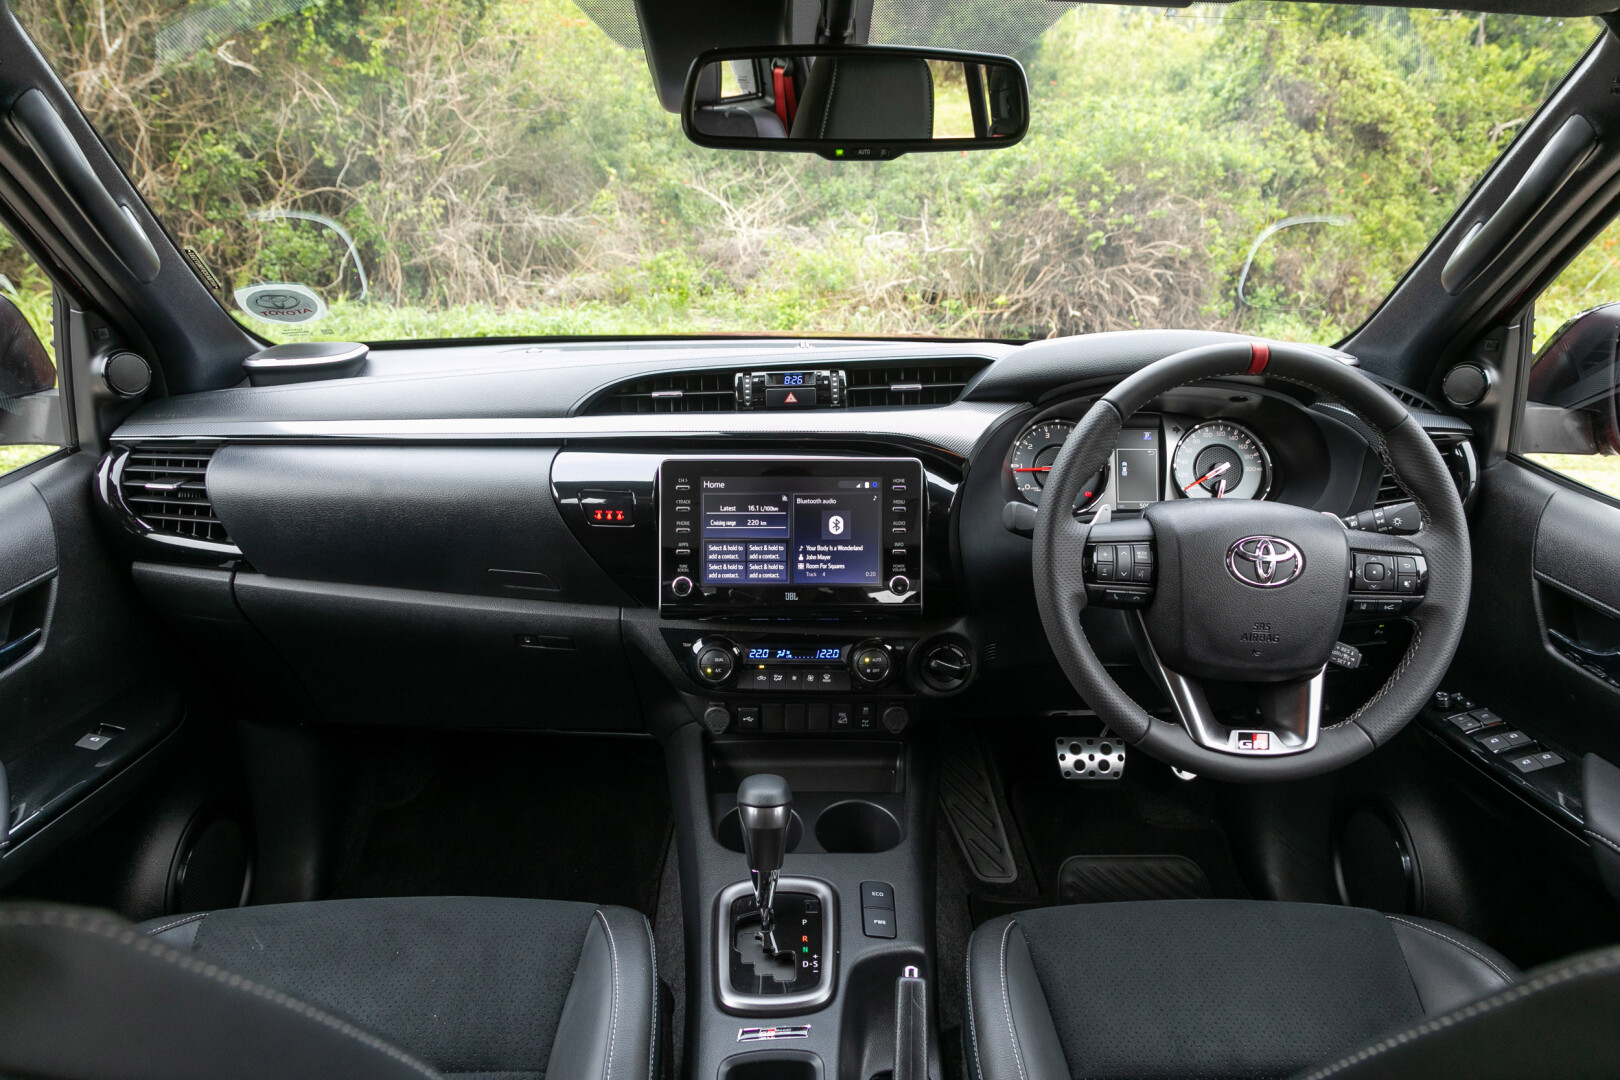 Toyota Hilux GR-S III interior